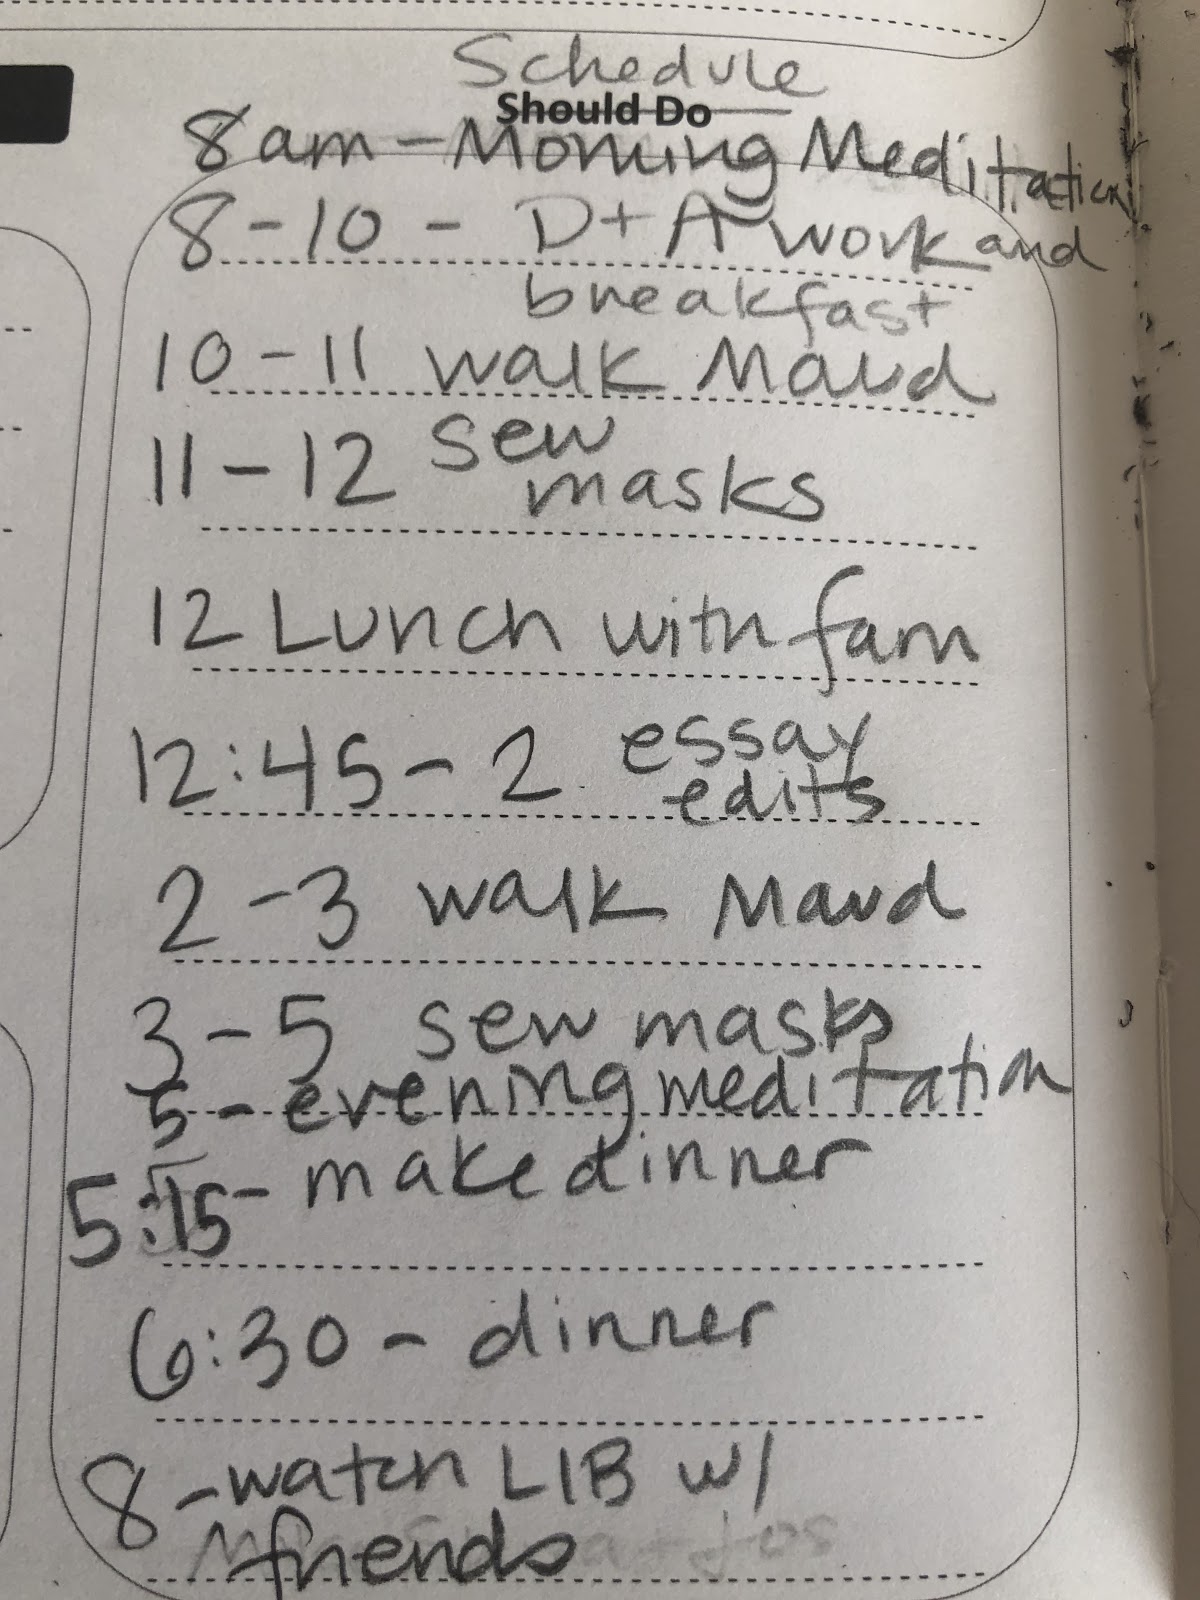 A hand-written schedule which Erin created to organize her day.